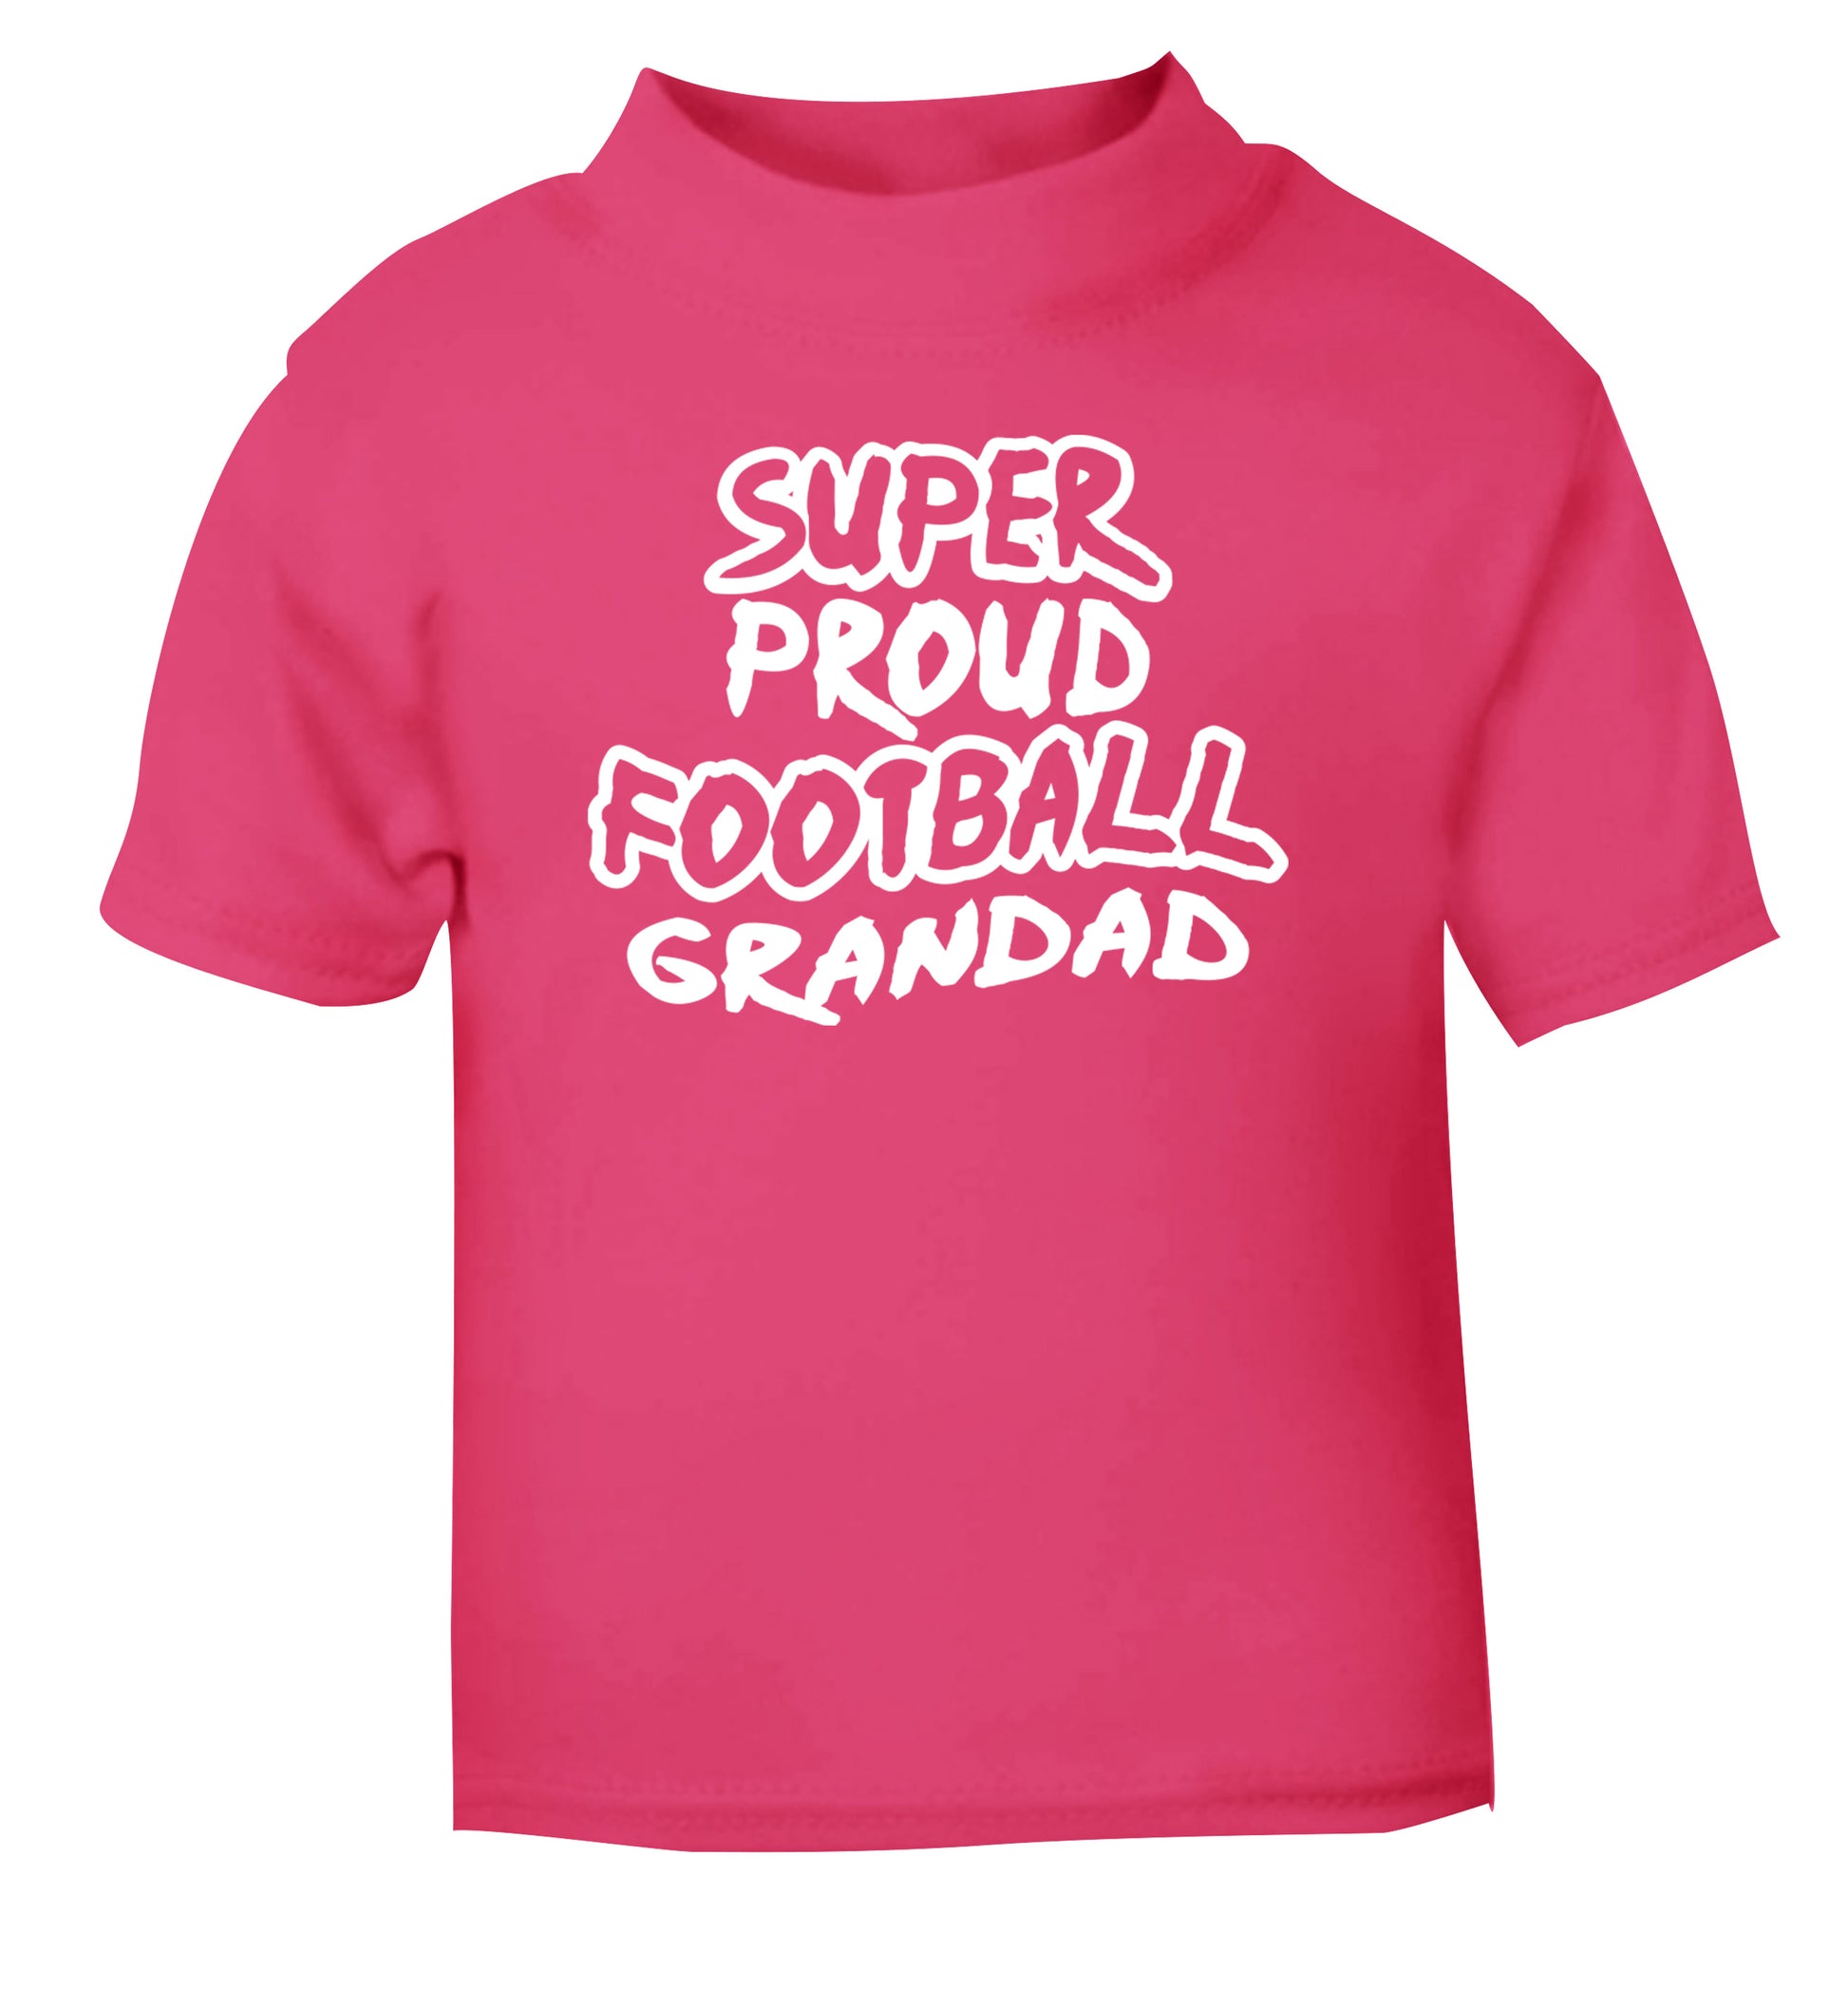 Super proud football grandad pink Baby Toddler Tshirt 2 Years